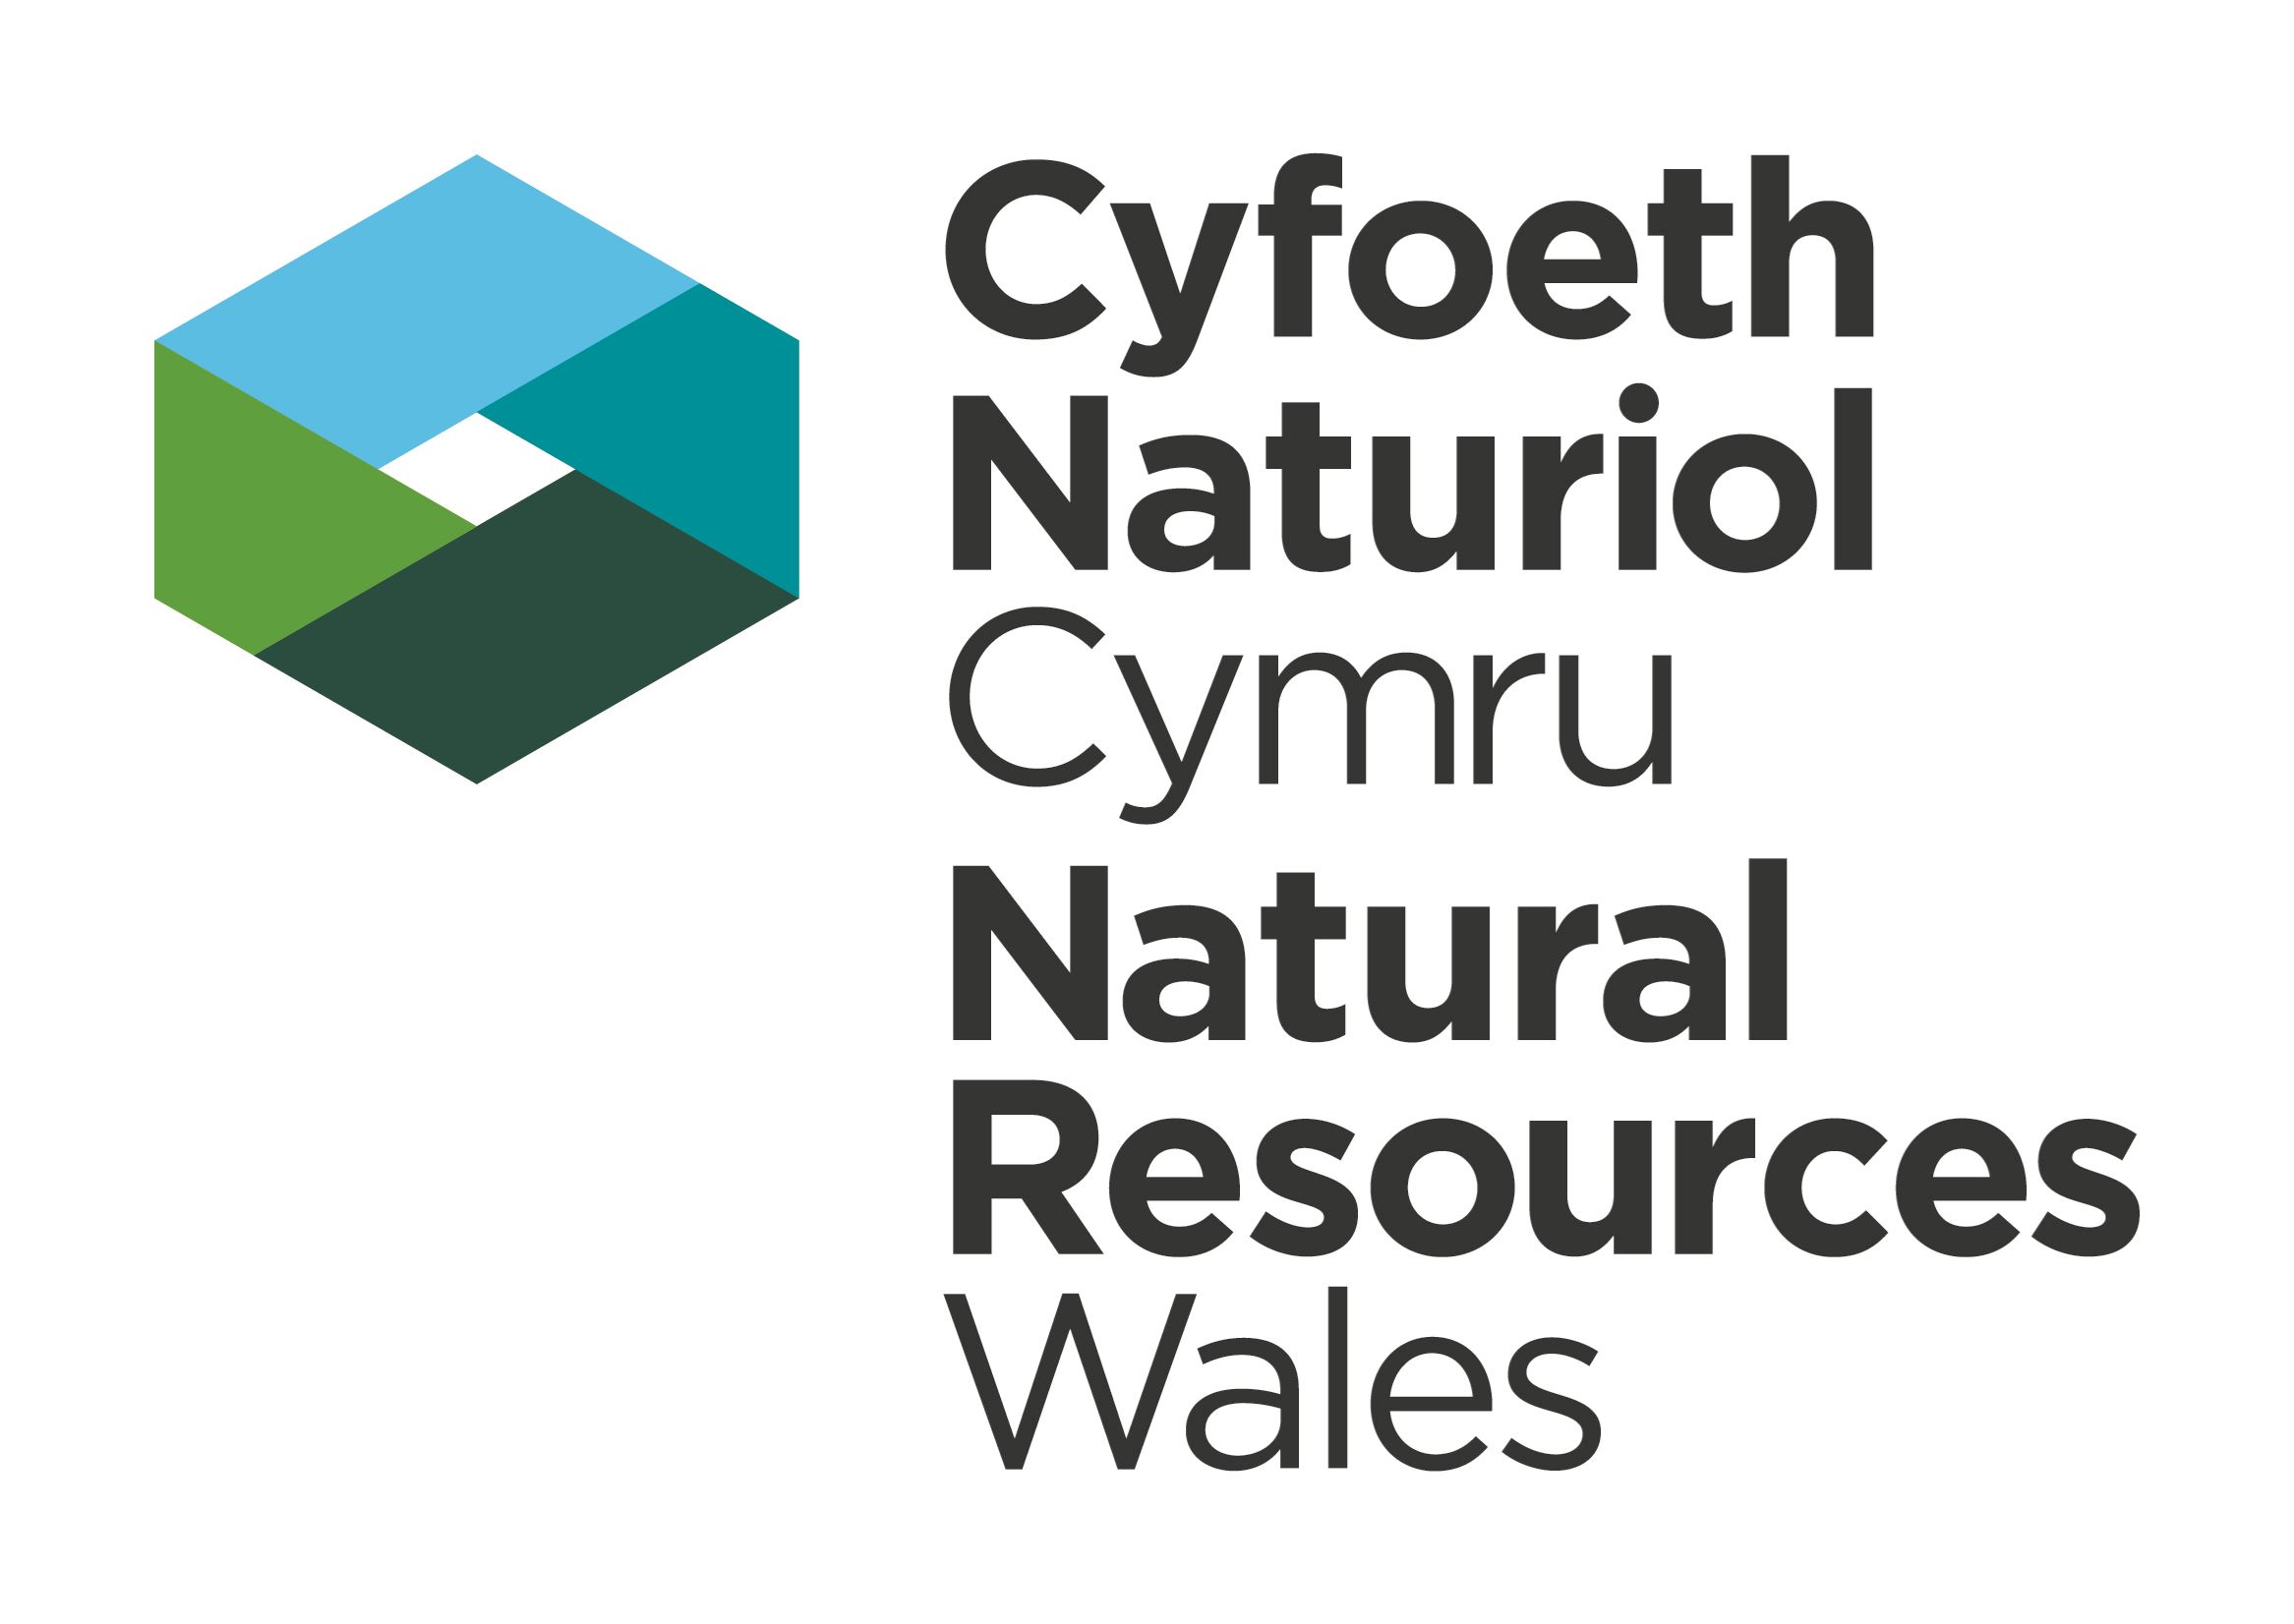 Natural Resources Wales logo